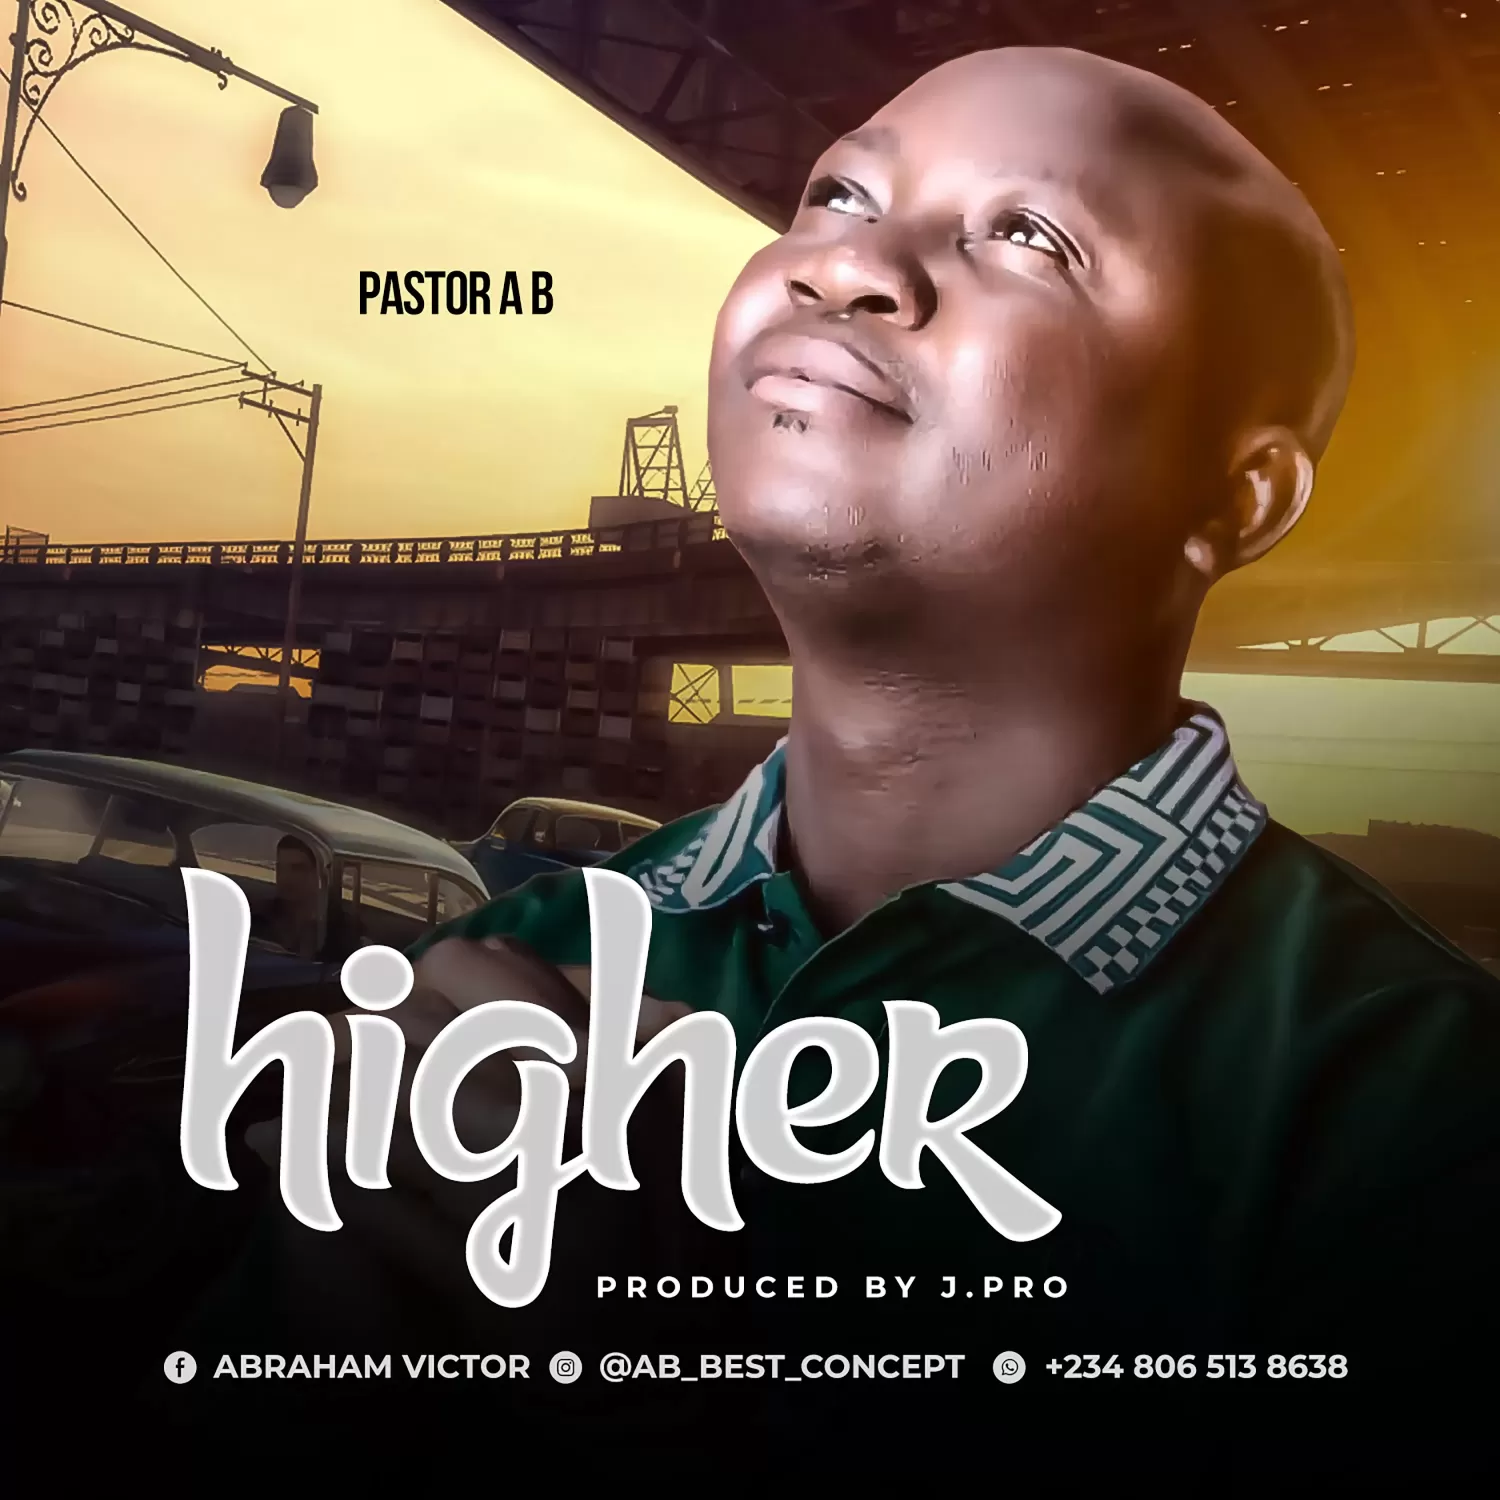 Pastor AB - Higher